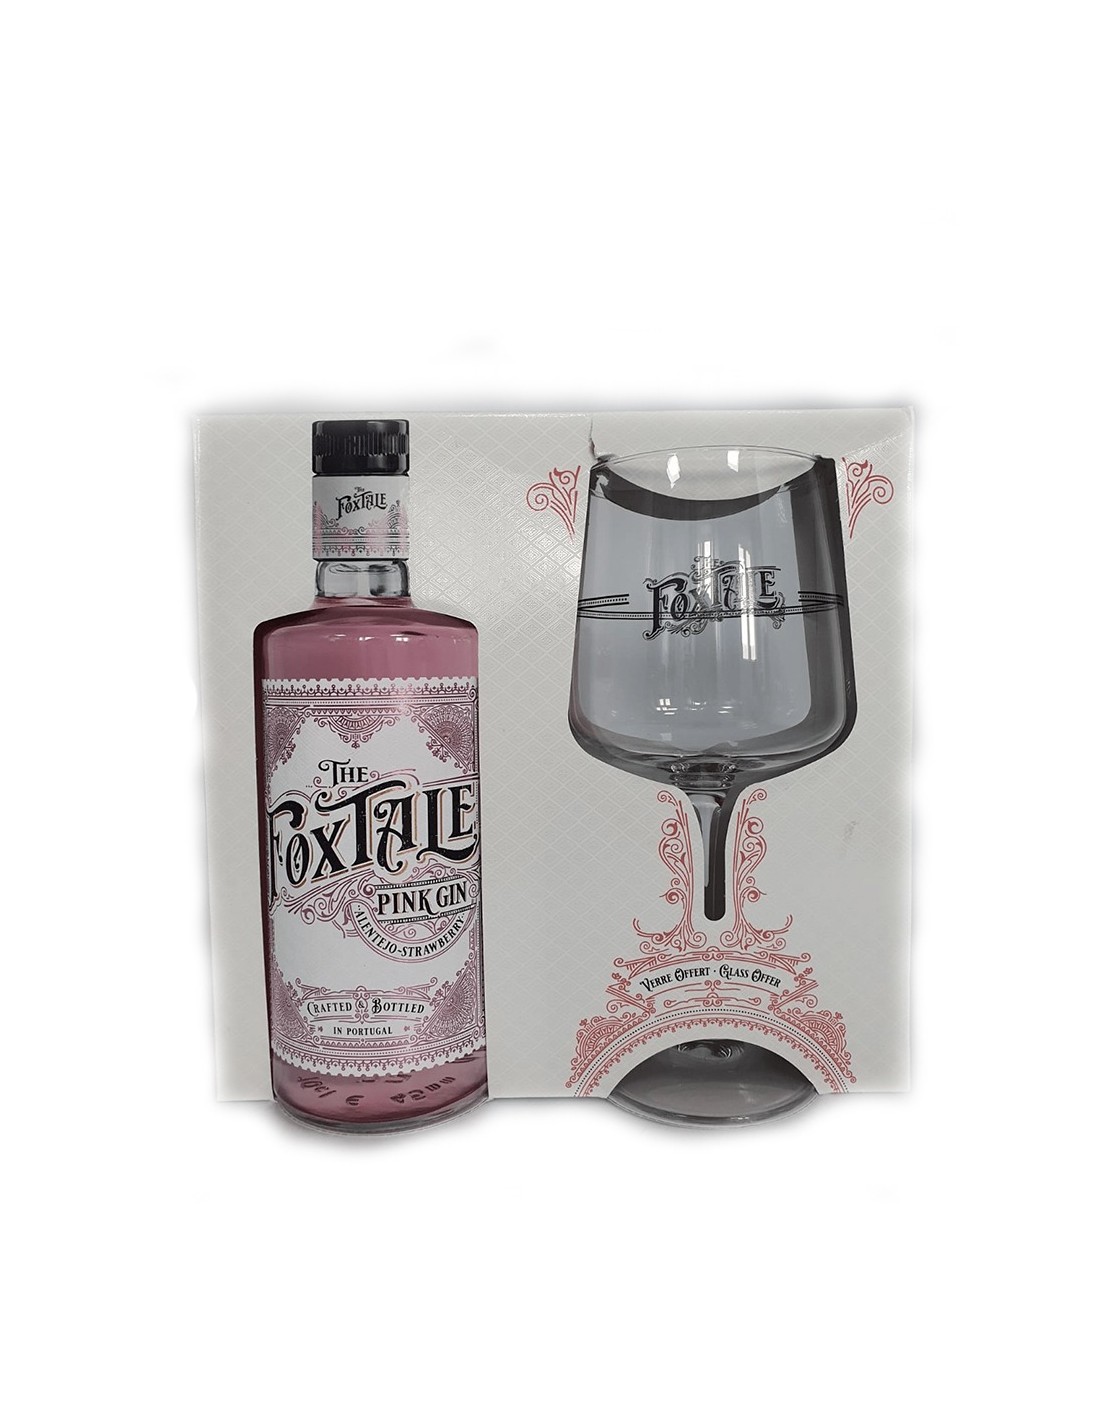 Gin The FoxTale Pink + Pahar, 37.5% alc., 0.7L, Portugalia alcooldiscount.ro